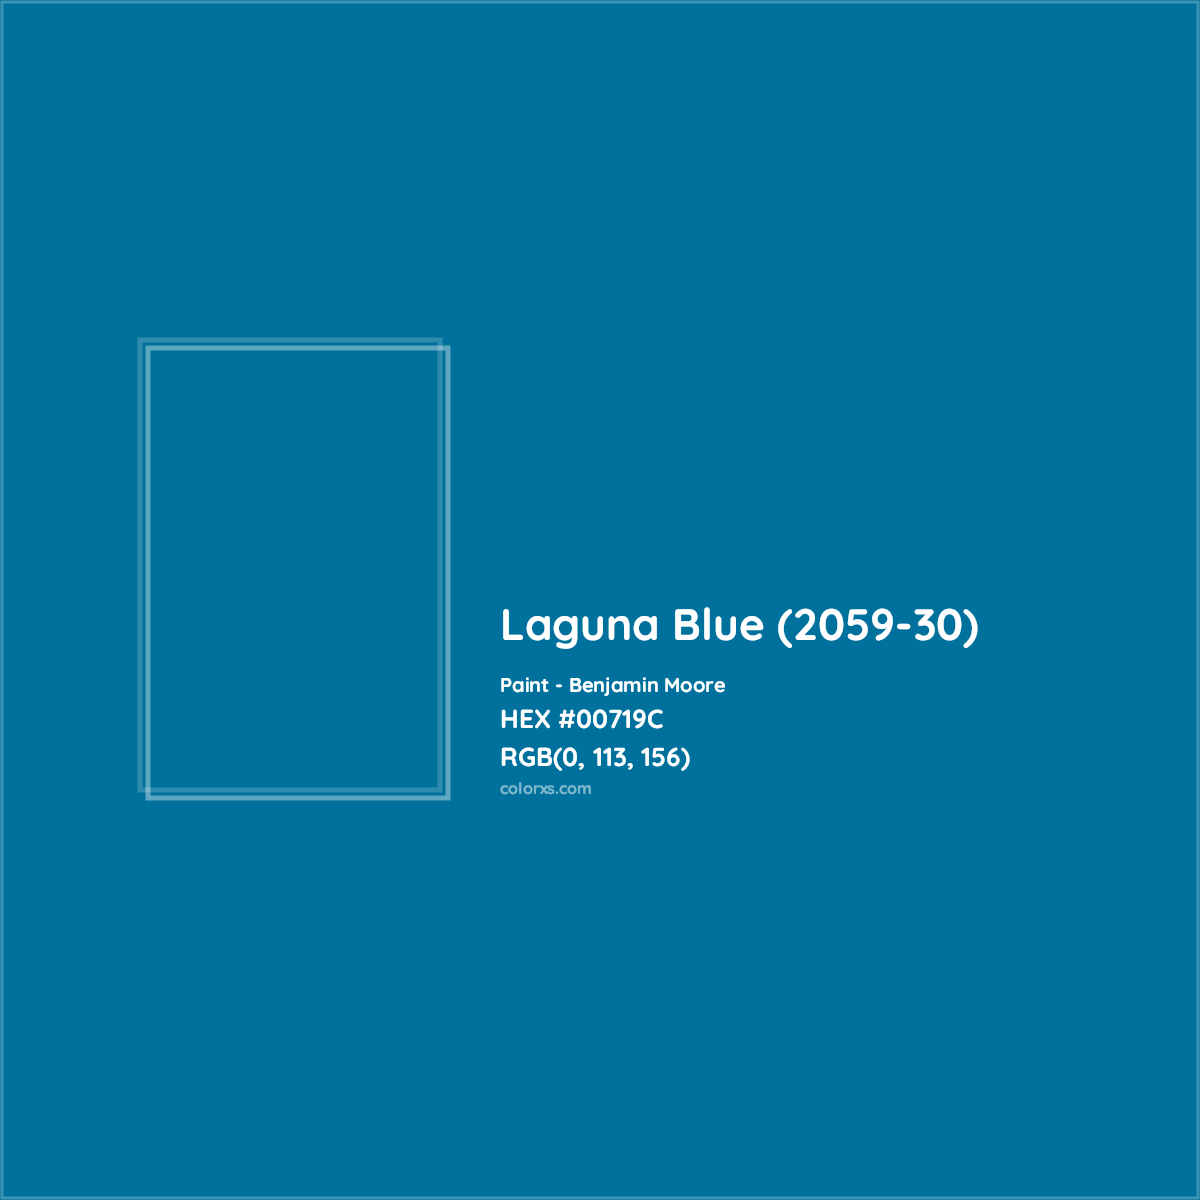 HEX #00719C Laguna Blue (2059-30) Paint Benjamin Moore - Color Code